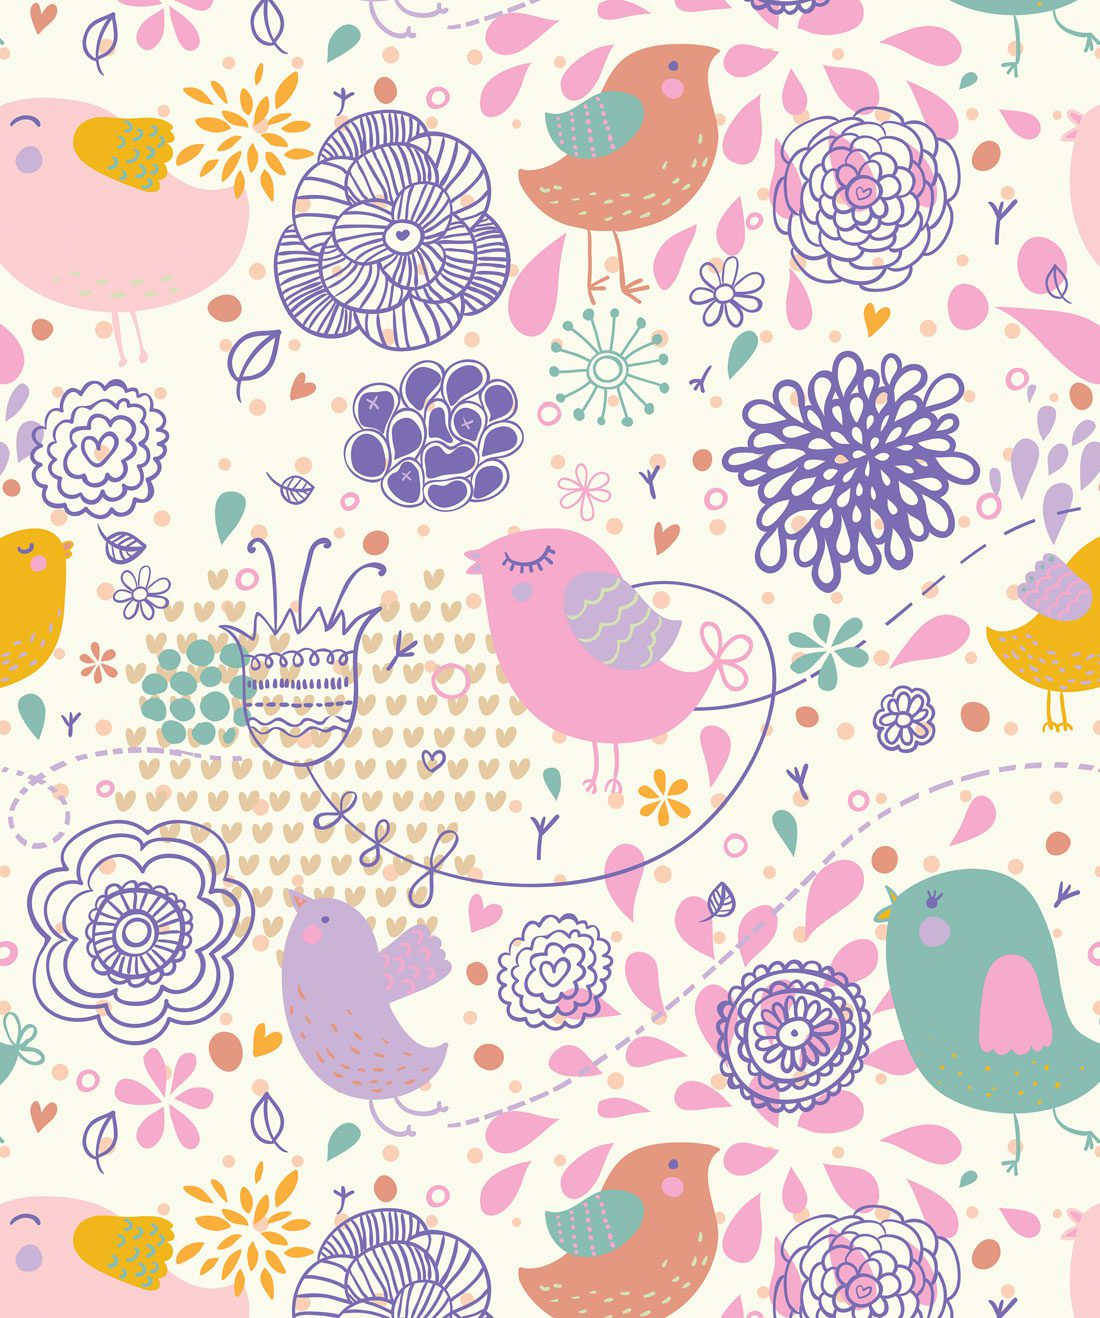 free birds wallpaper